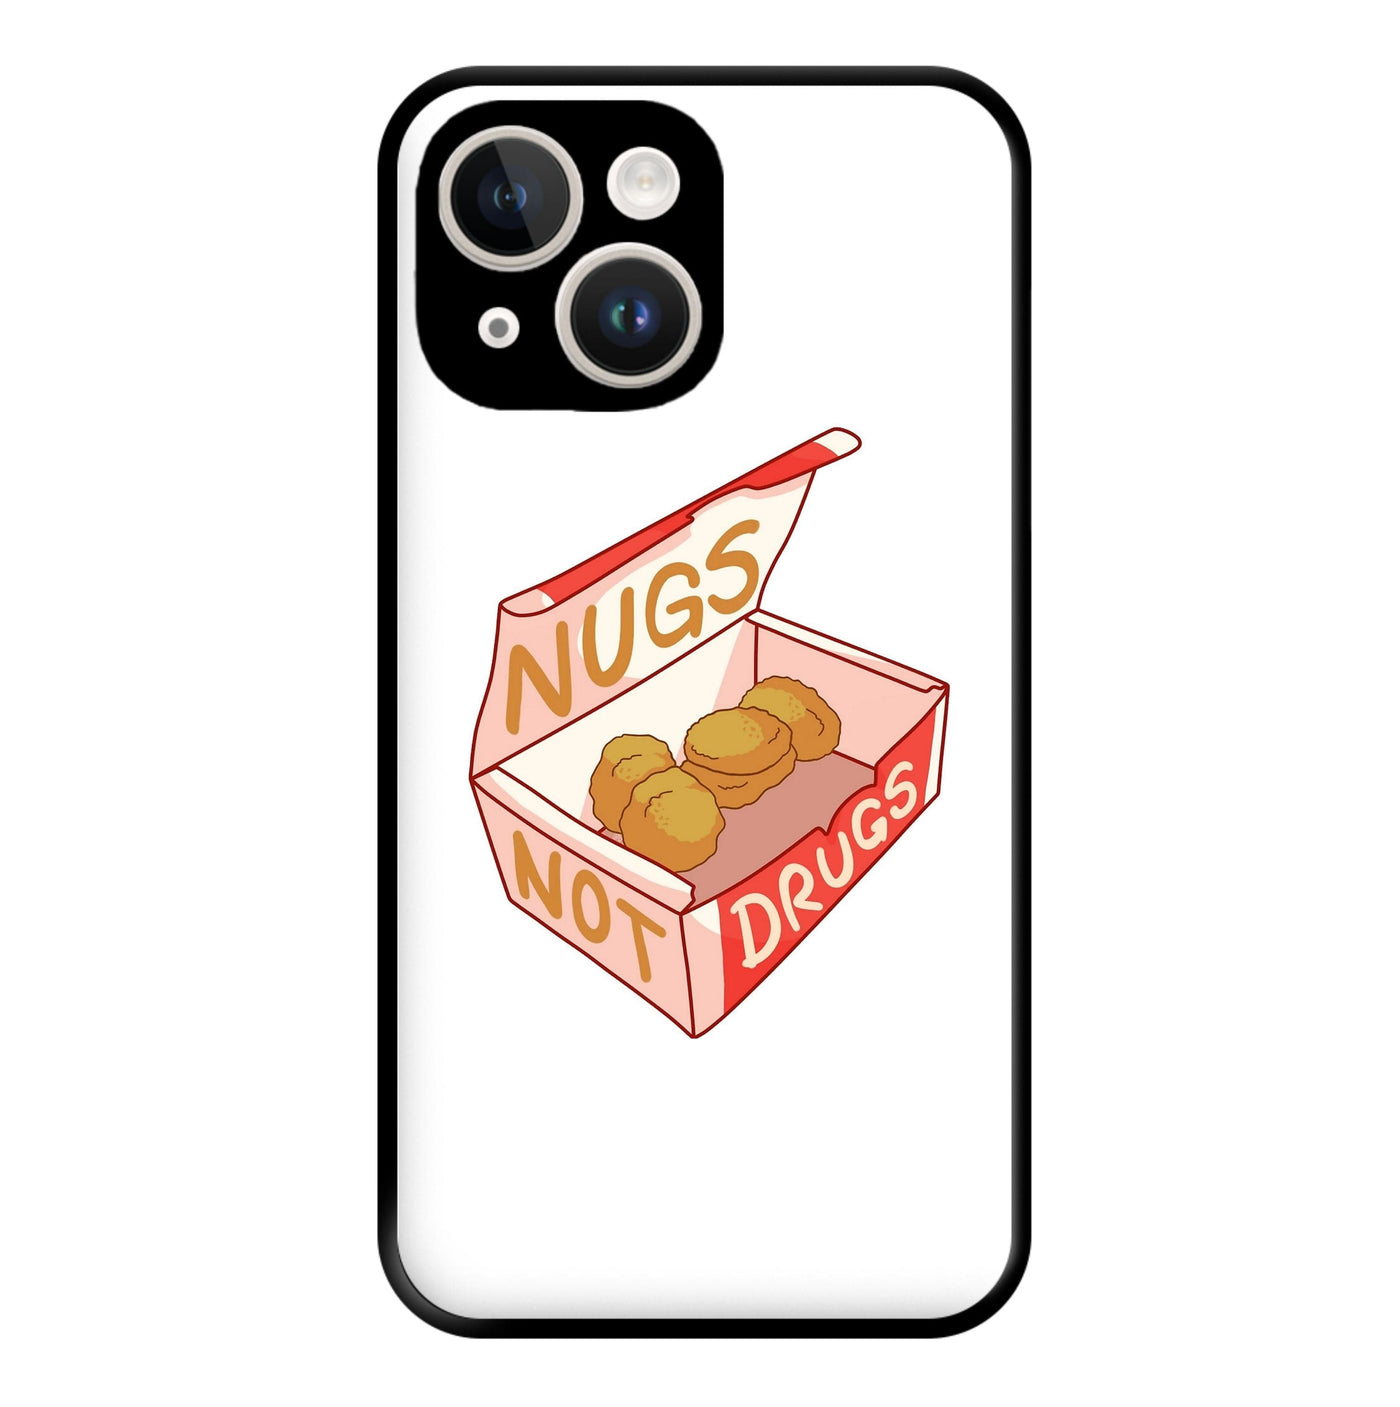 Nugs not Drugs Tumblr Style Phone Case